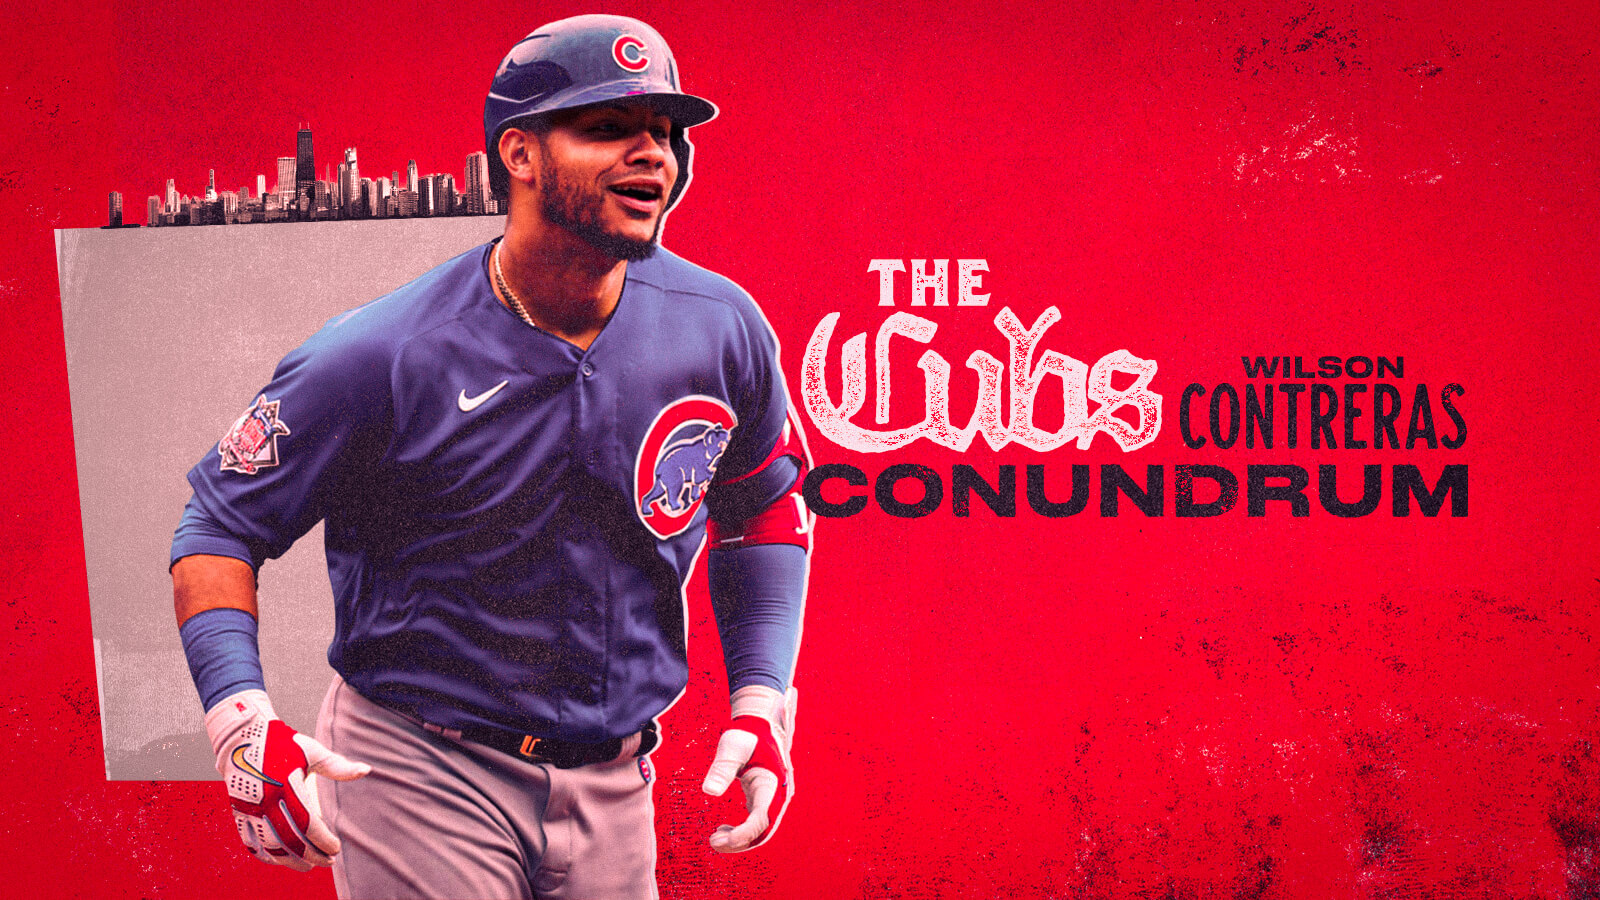 Make It Make Sense: Chicago Cubs - Baseball ProspectusBaseball Prospectus